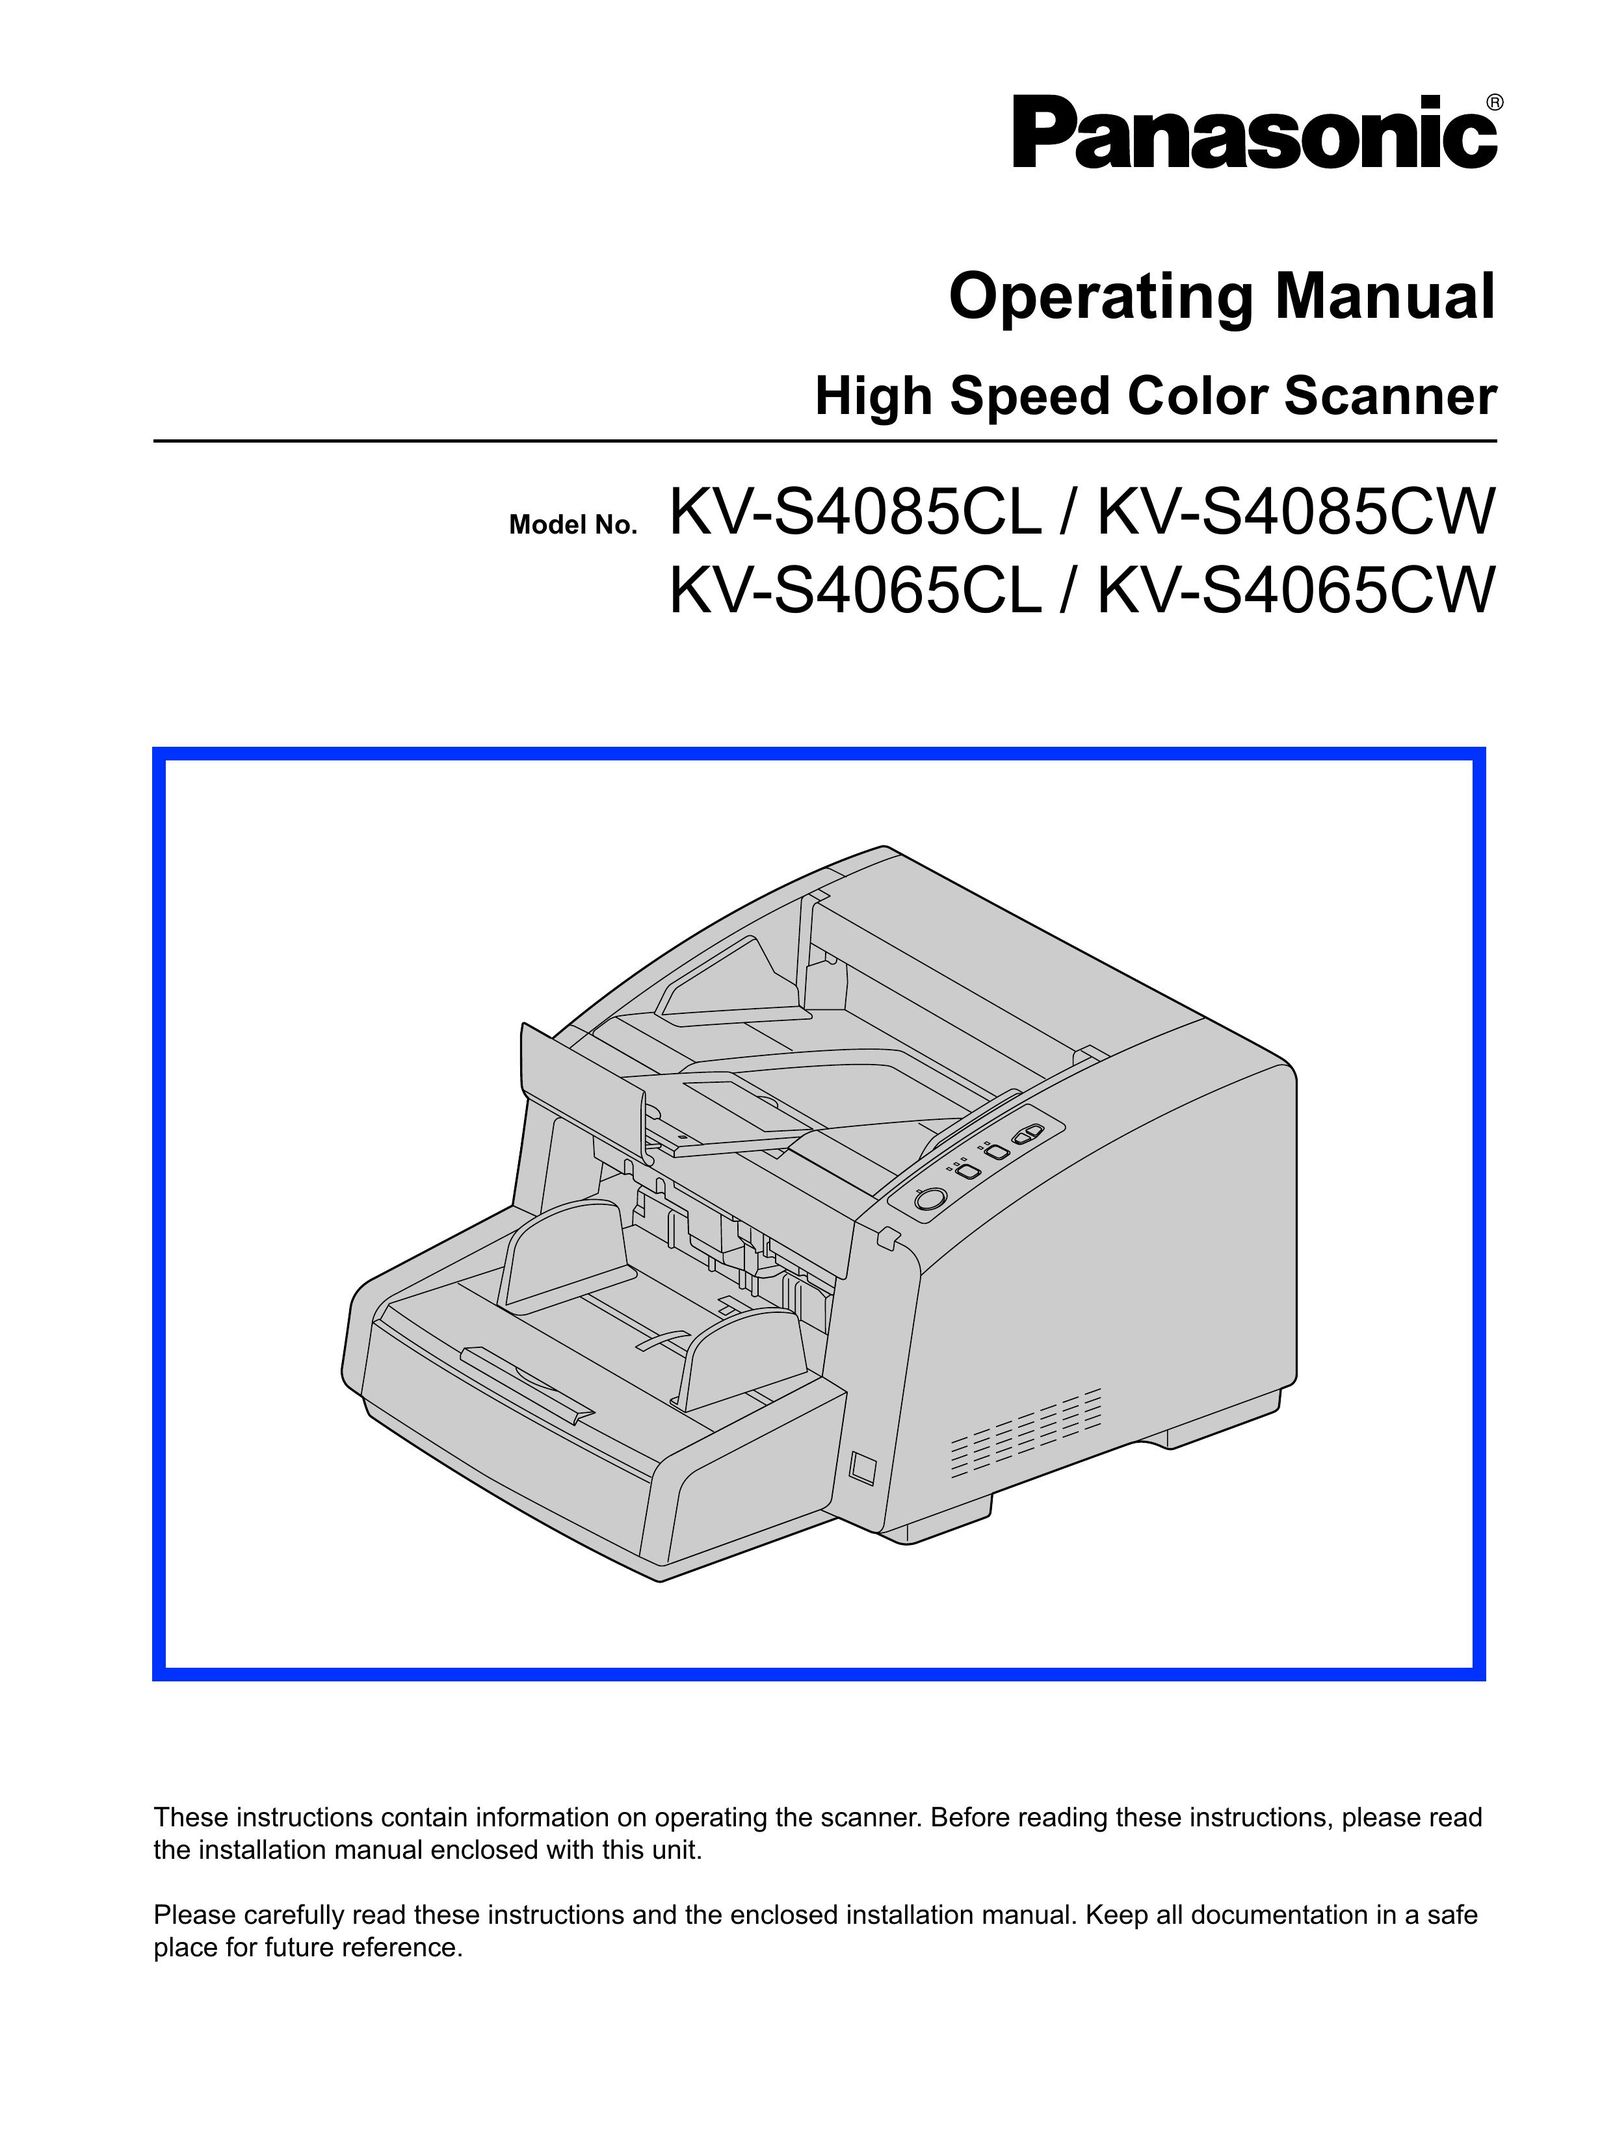 Panasonic KV-S4065CW Scanner User Manual